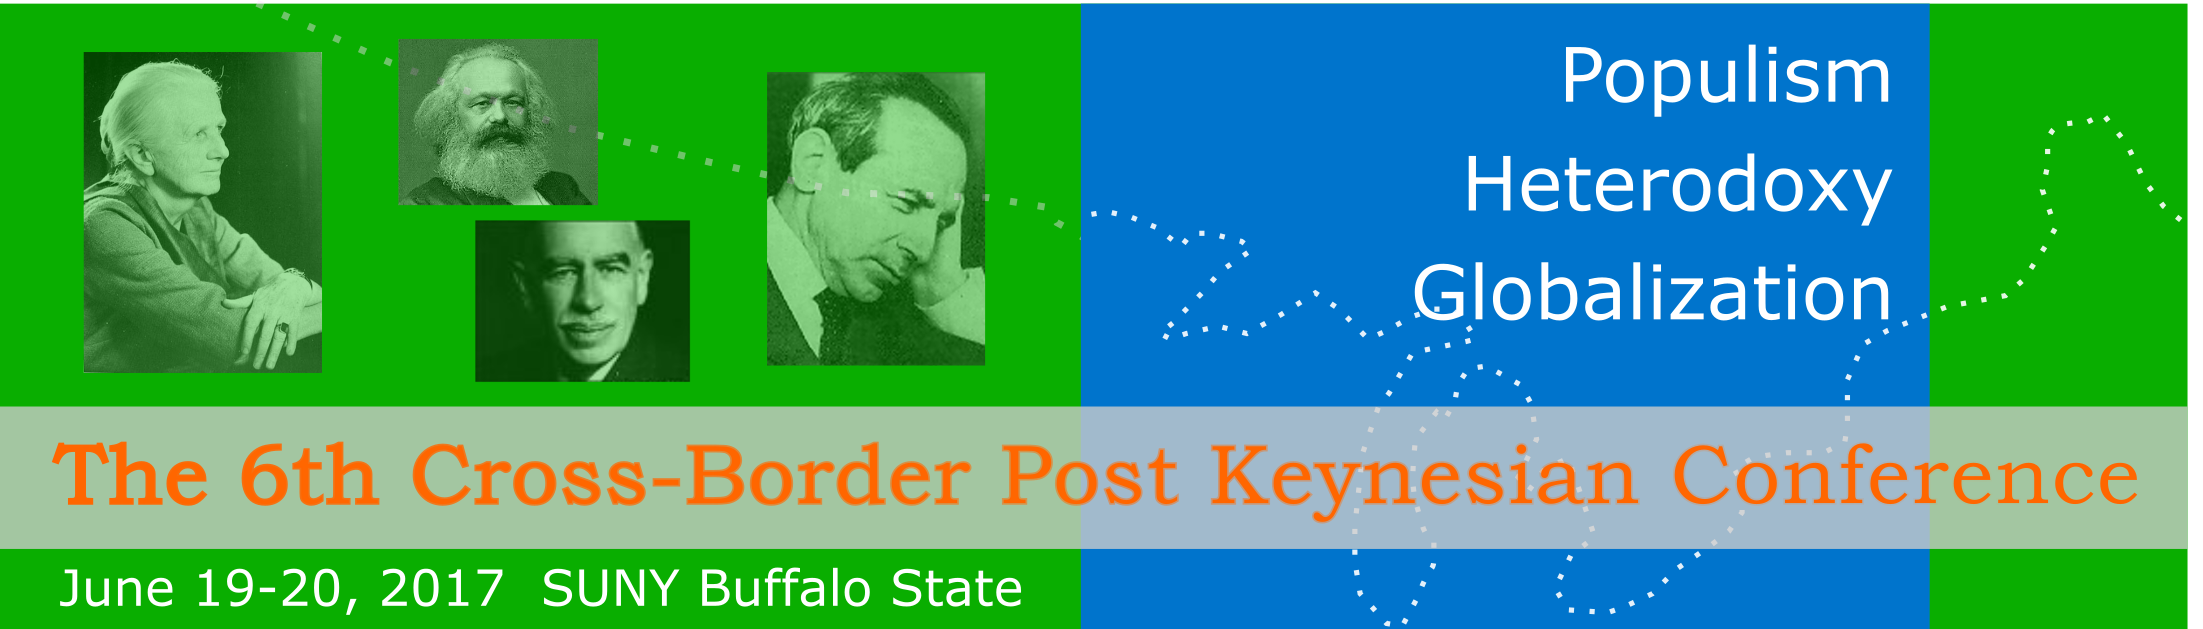 The 6th Cross-Border Post Keynesian Conference